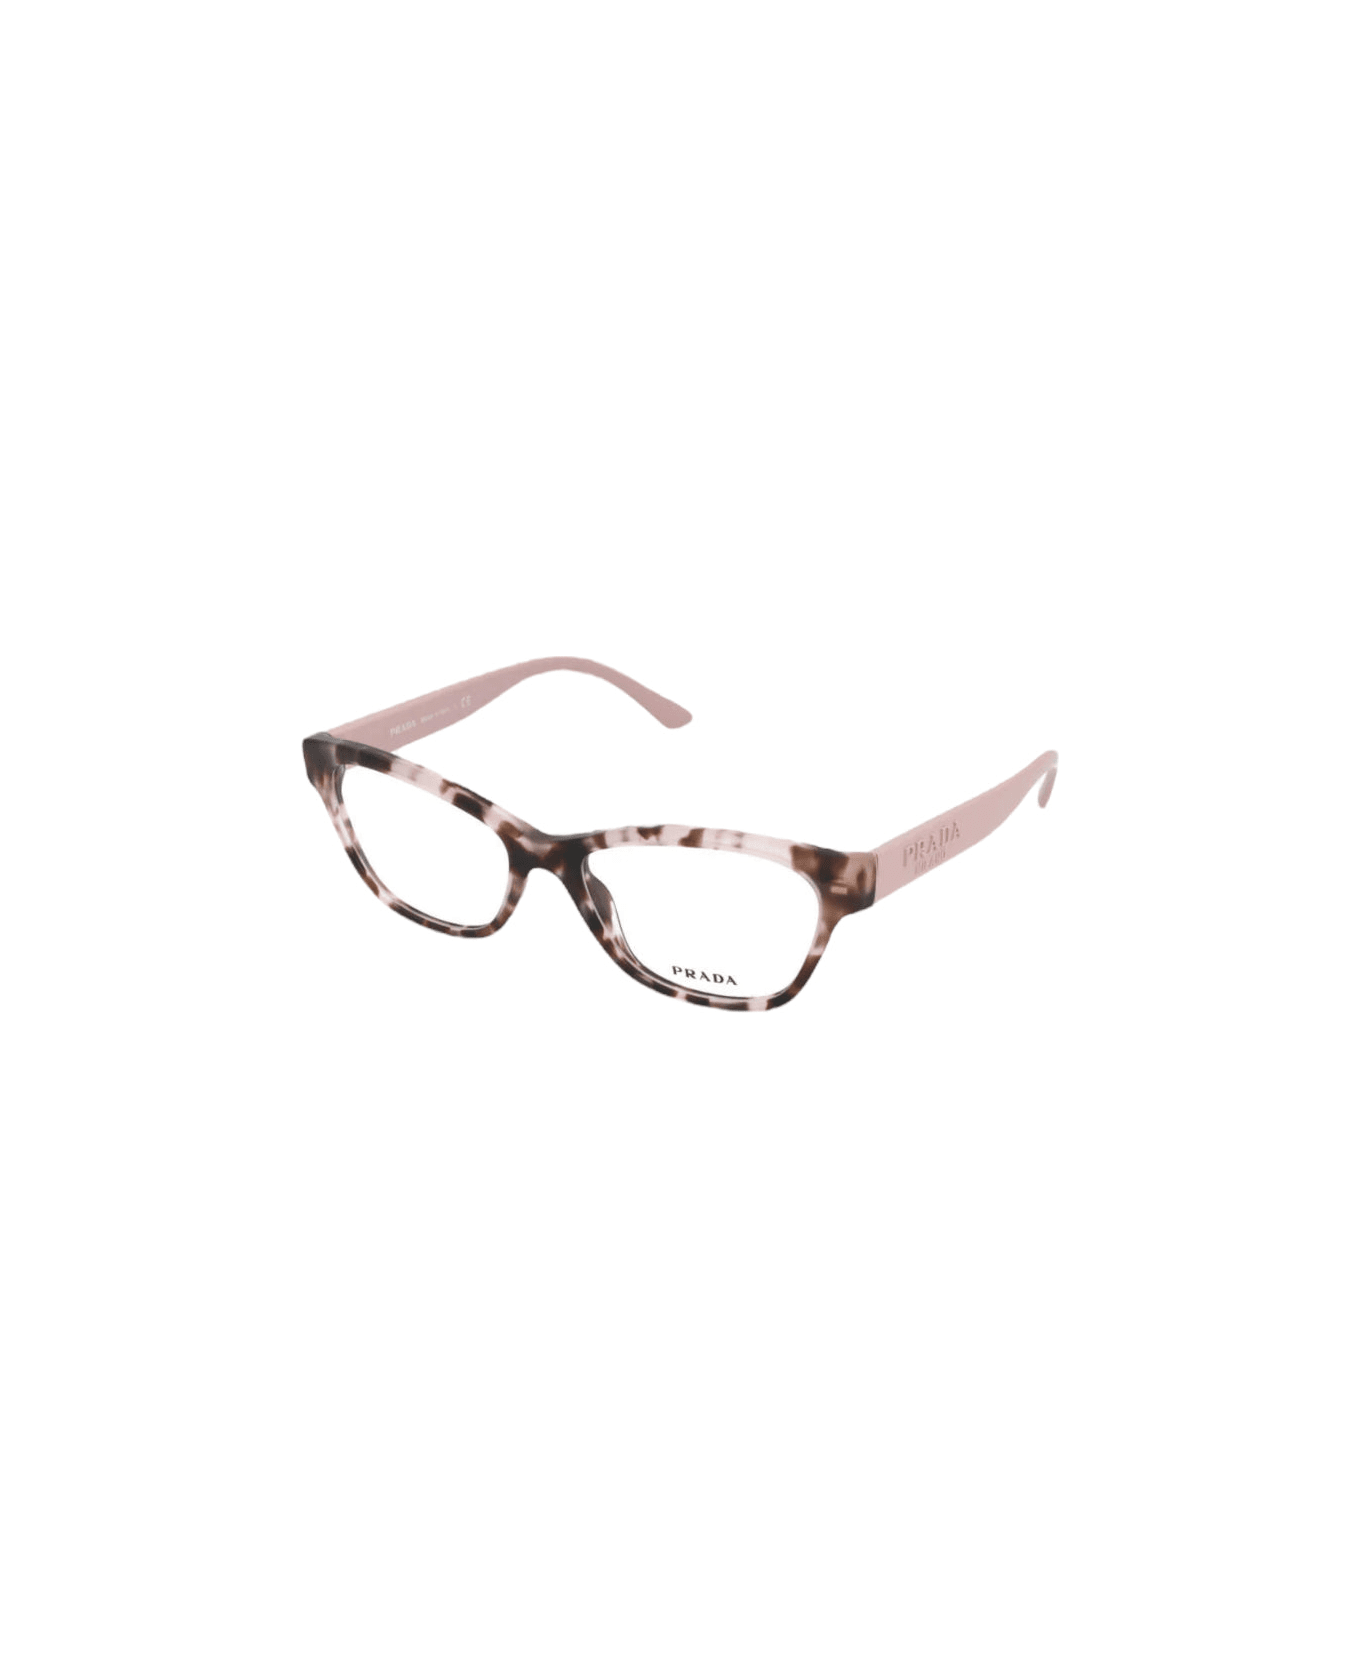 Prada Eyewear Opr 03w Glasses